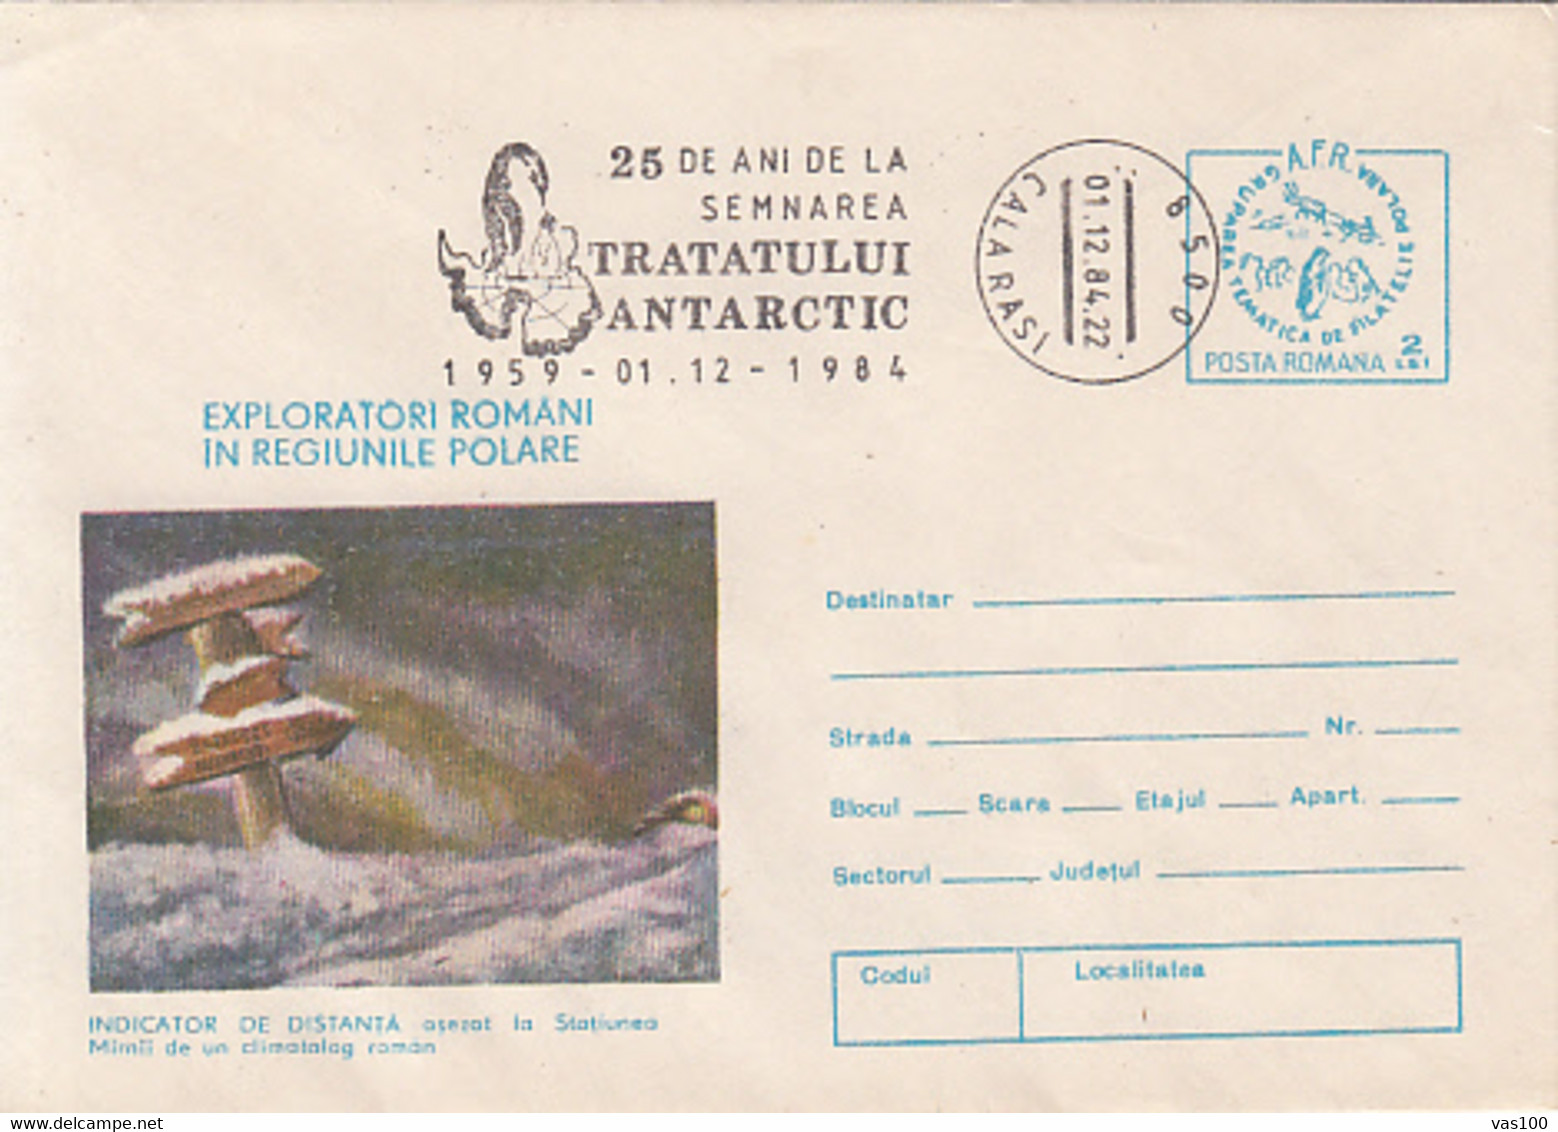 SOUTH POLE, ANTARCTIC TREATY SPECIAL POSTMARK, ANTARCTIC LANDSCAPE, COVER STATIONERY, ENTIER POSTAL, 1984, ROMANIA - Antarctic Treaty